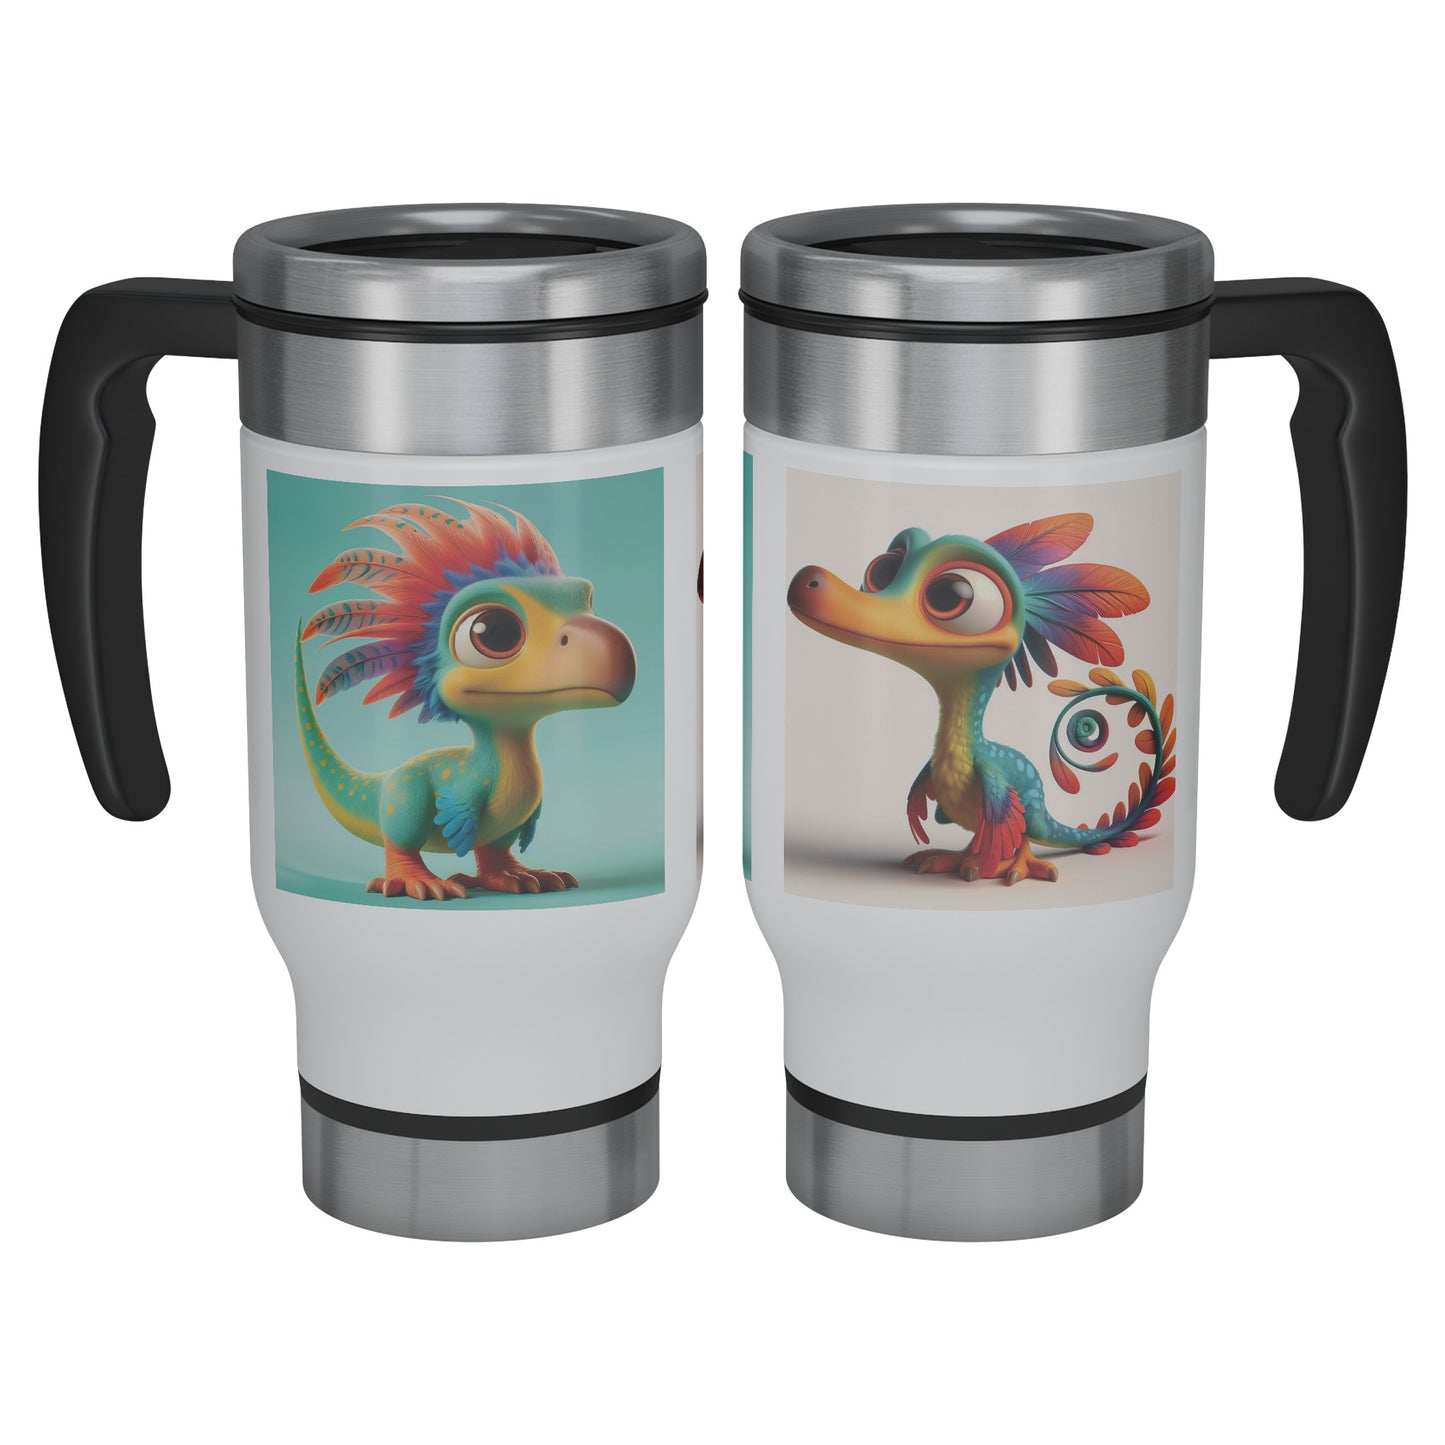 Adorable & Charming Dinosaurs - Travel Mug - Dinosaur #19